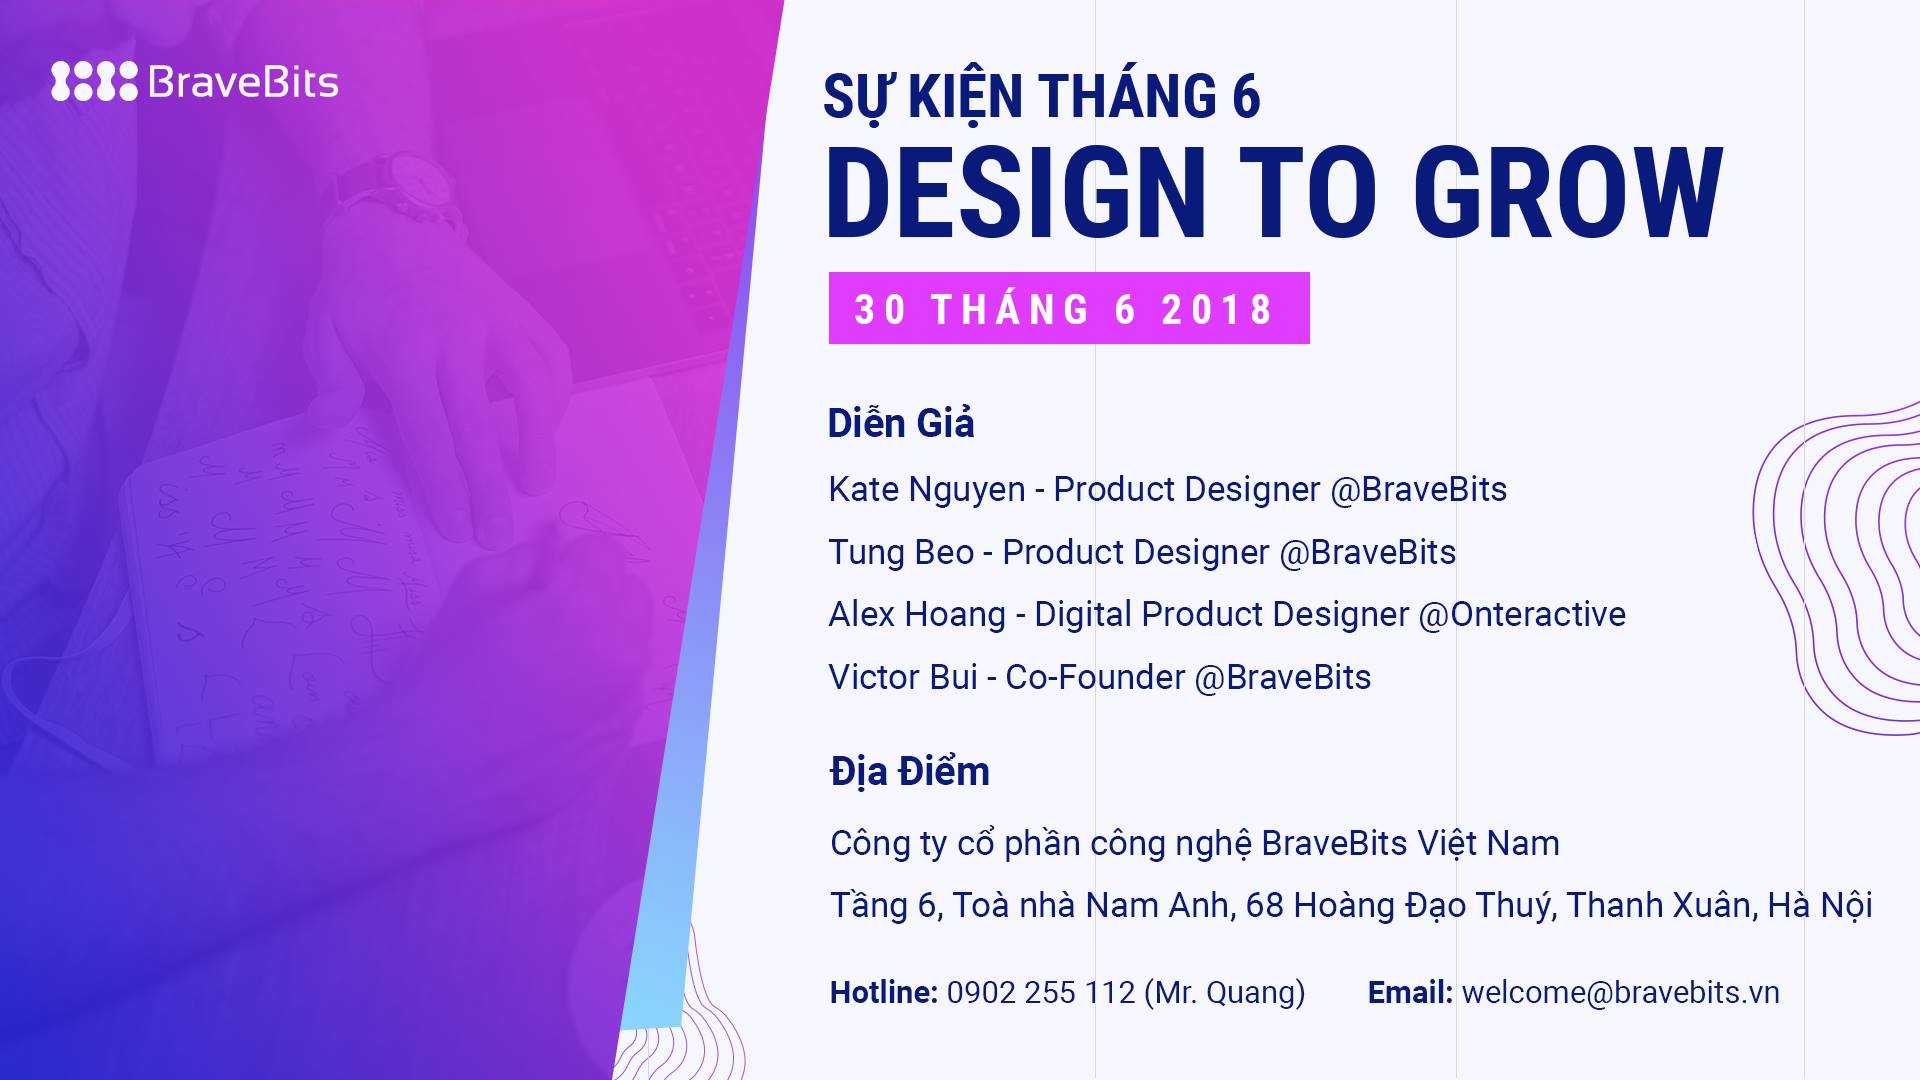 su kien thang 6 design to grow bravebits - new